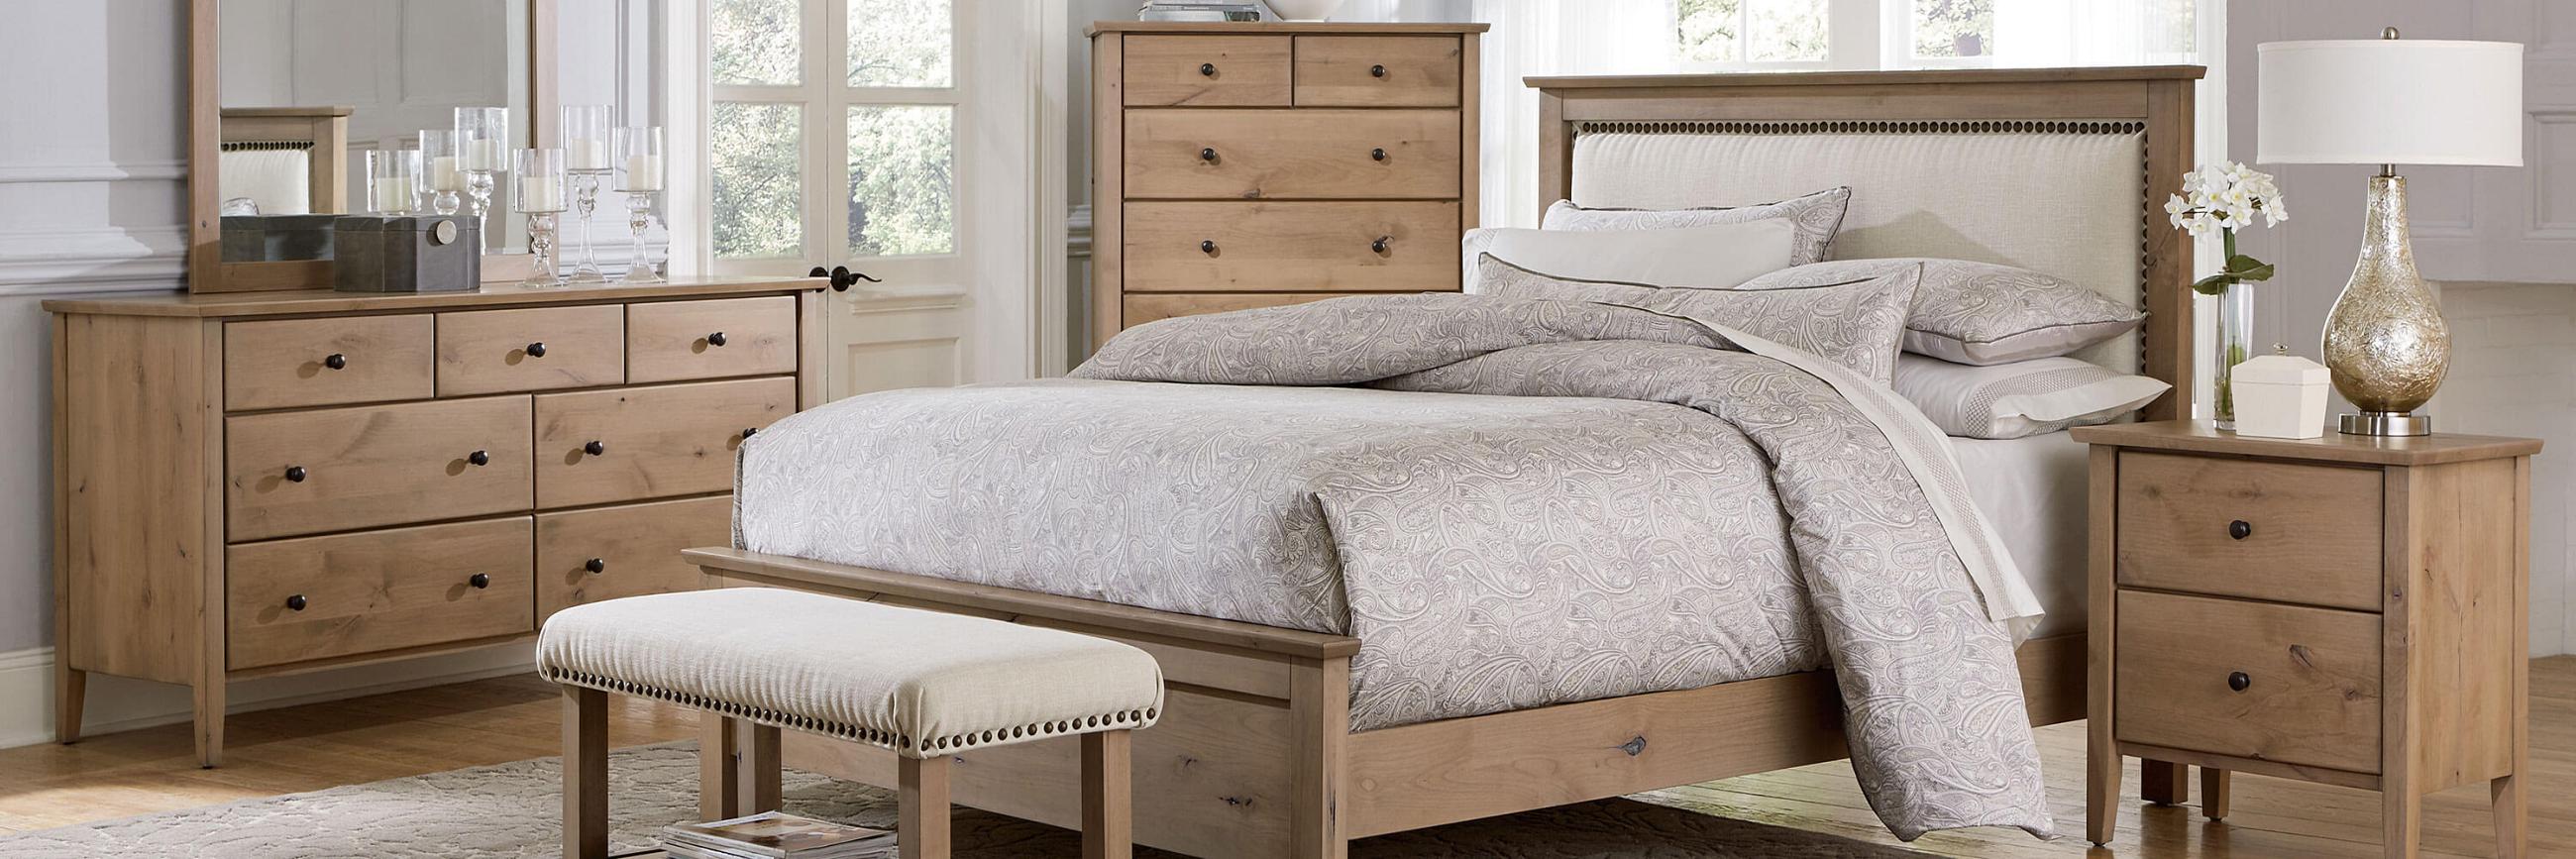 NIWA American Made Products Bedroom Furniture Set